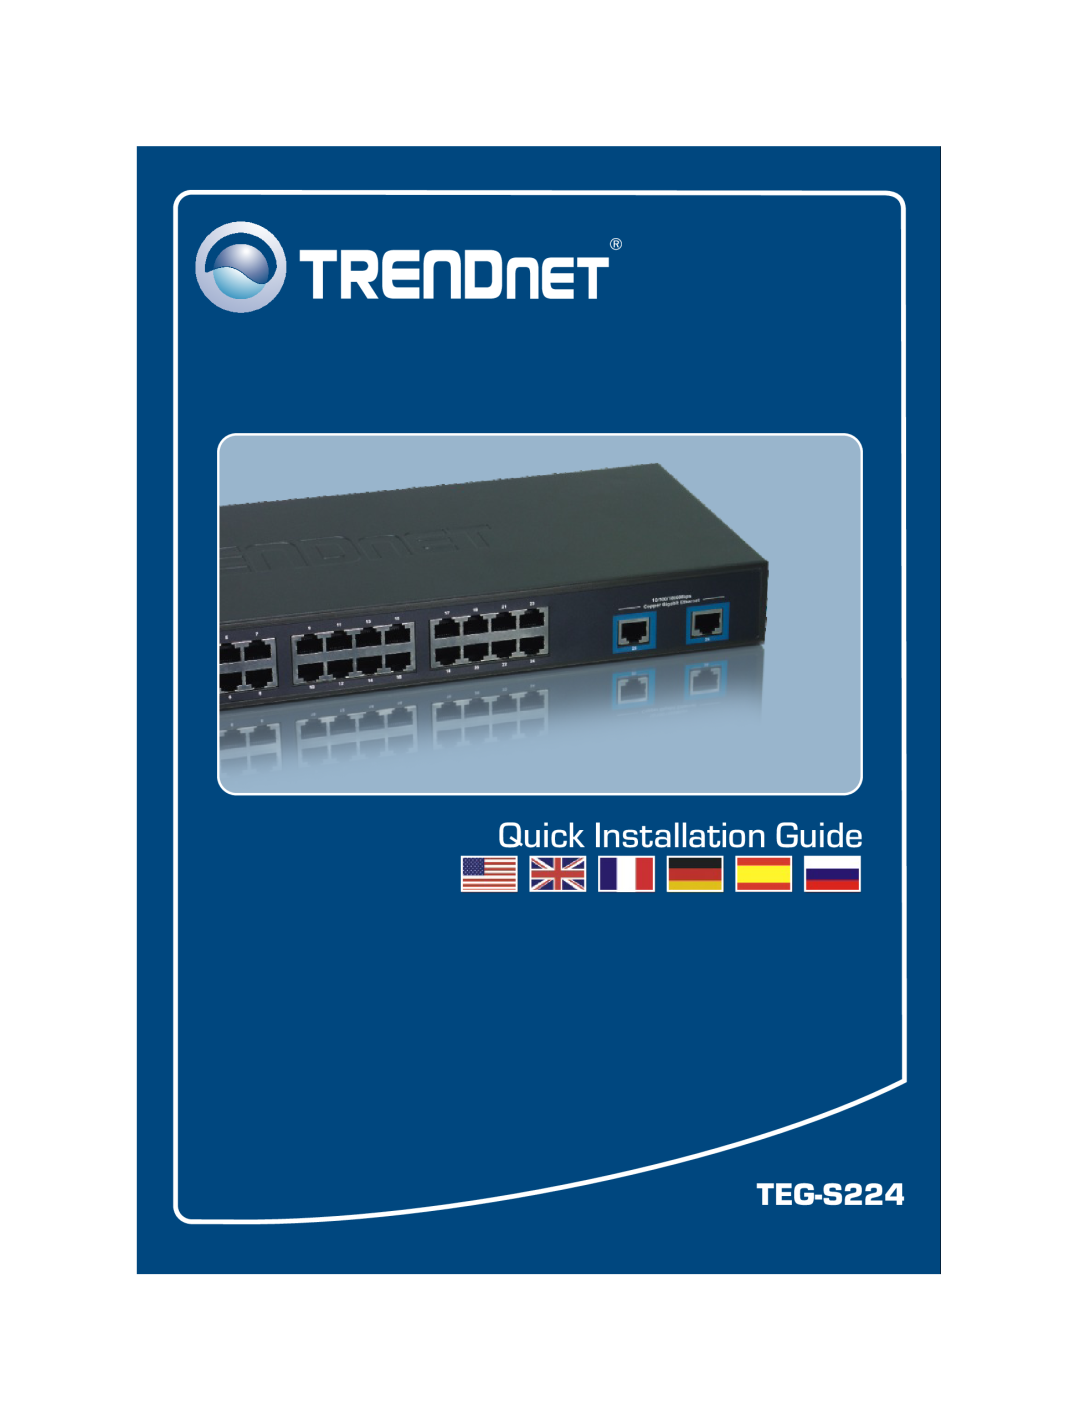 TRENDnet TEG-S224 manual Quick Installation Guide 